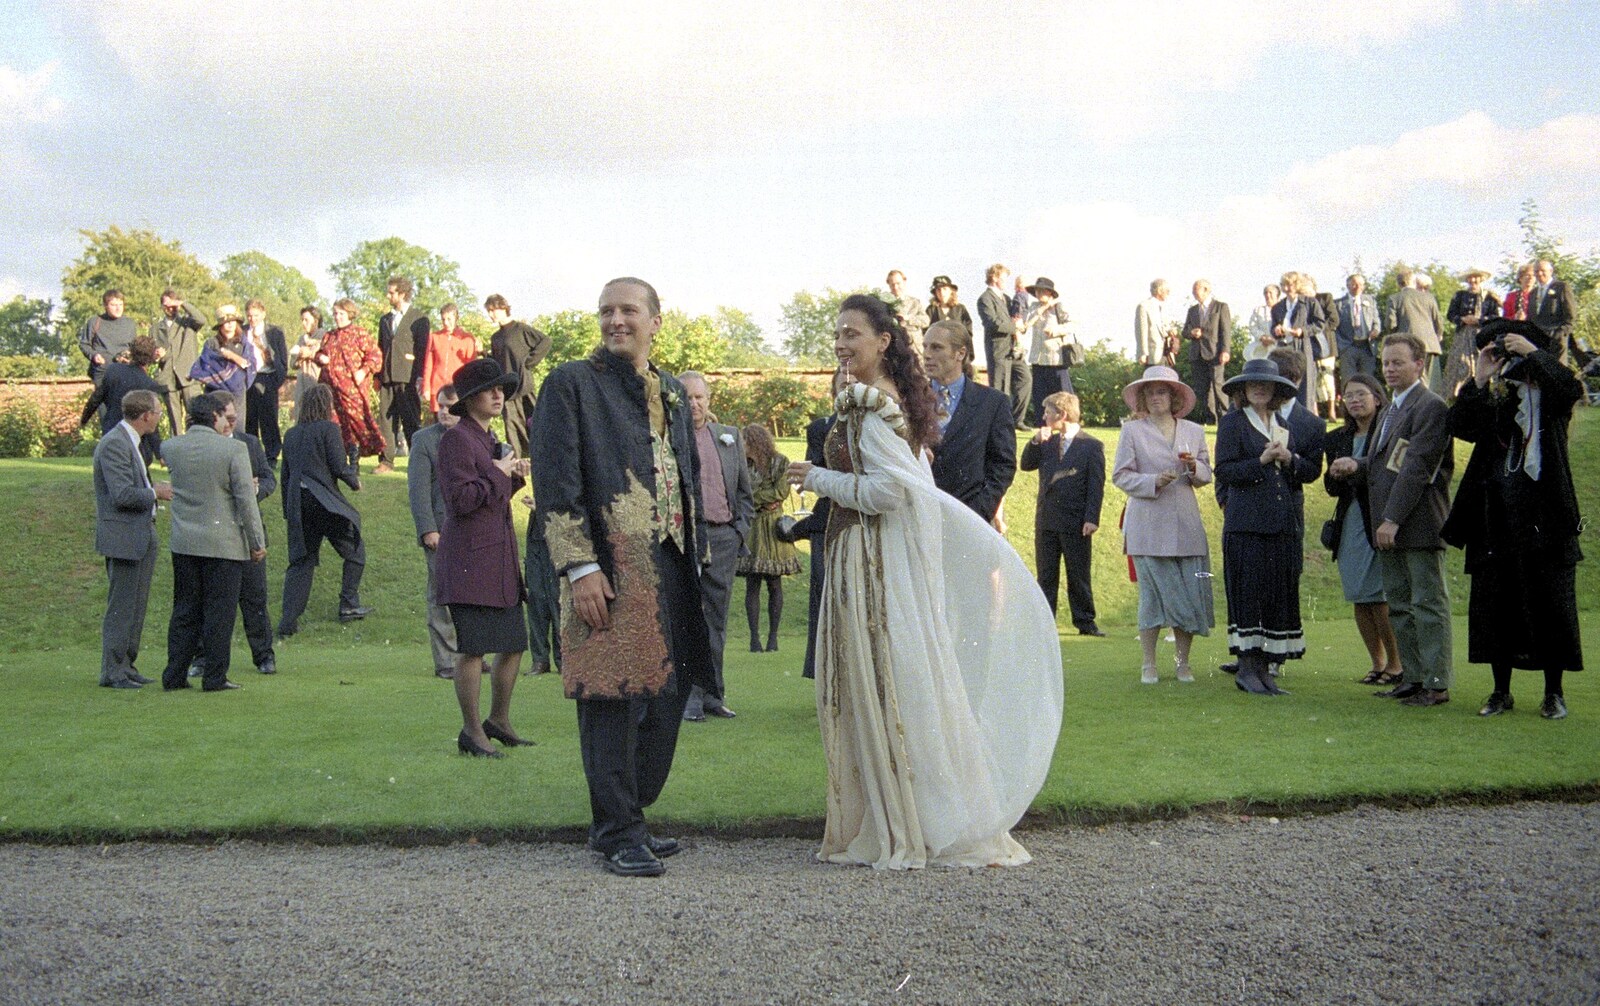 Stuart and Sarah's CISU Wedding, Naworth Castle, Brampton, Cumbria - 21st September 1996: Stuart and Sarah model their threads in the garden